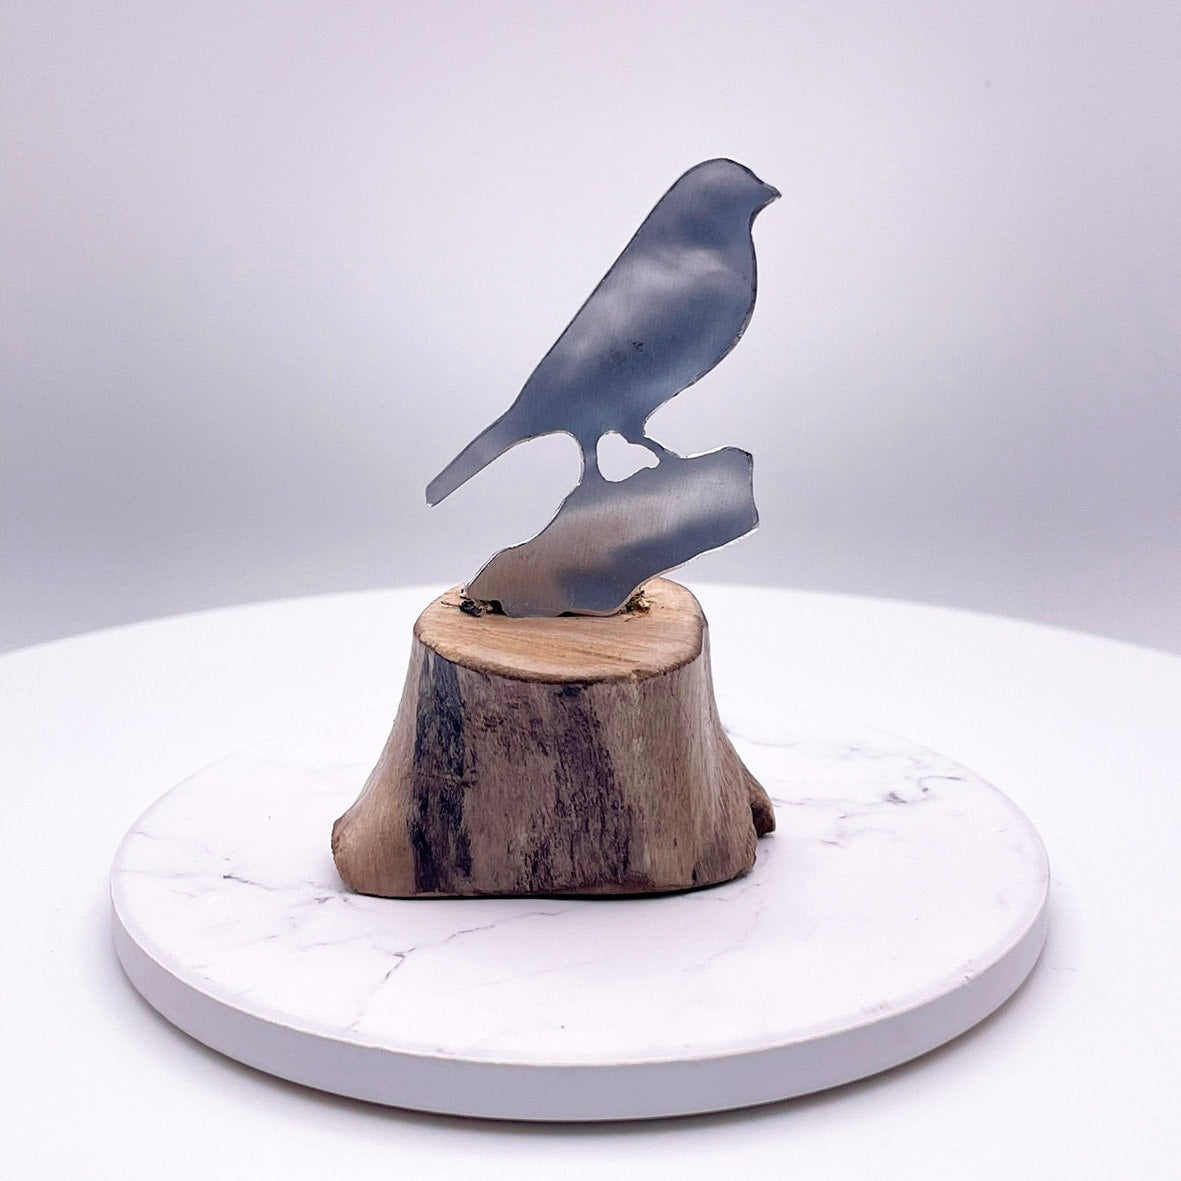 Goldfinch - Mini Goldfinch - Mini Goldfinch Sculpture - Metal bird - Goldfinch on Wood - Miniature Ornament - Bird gift - Nature Lover